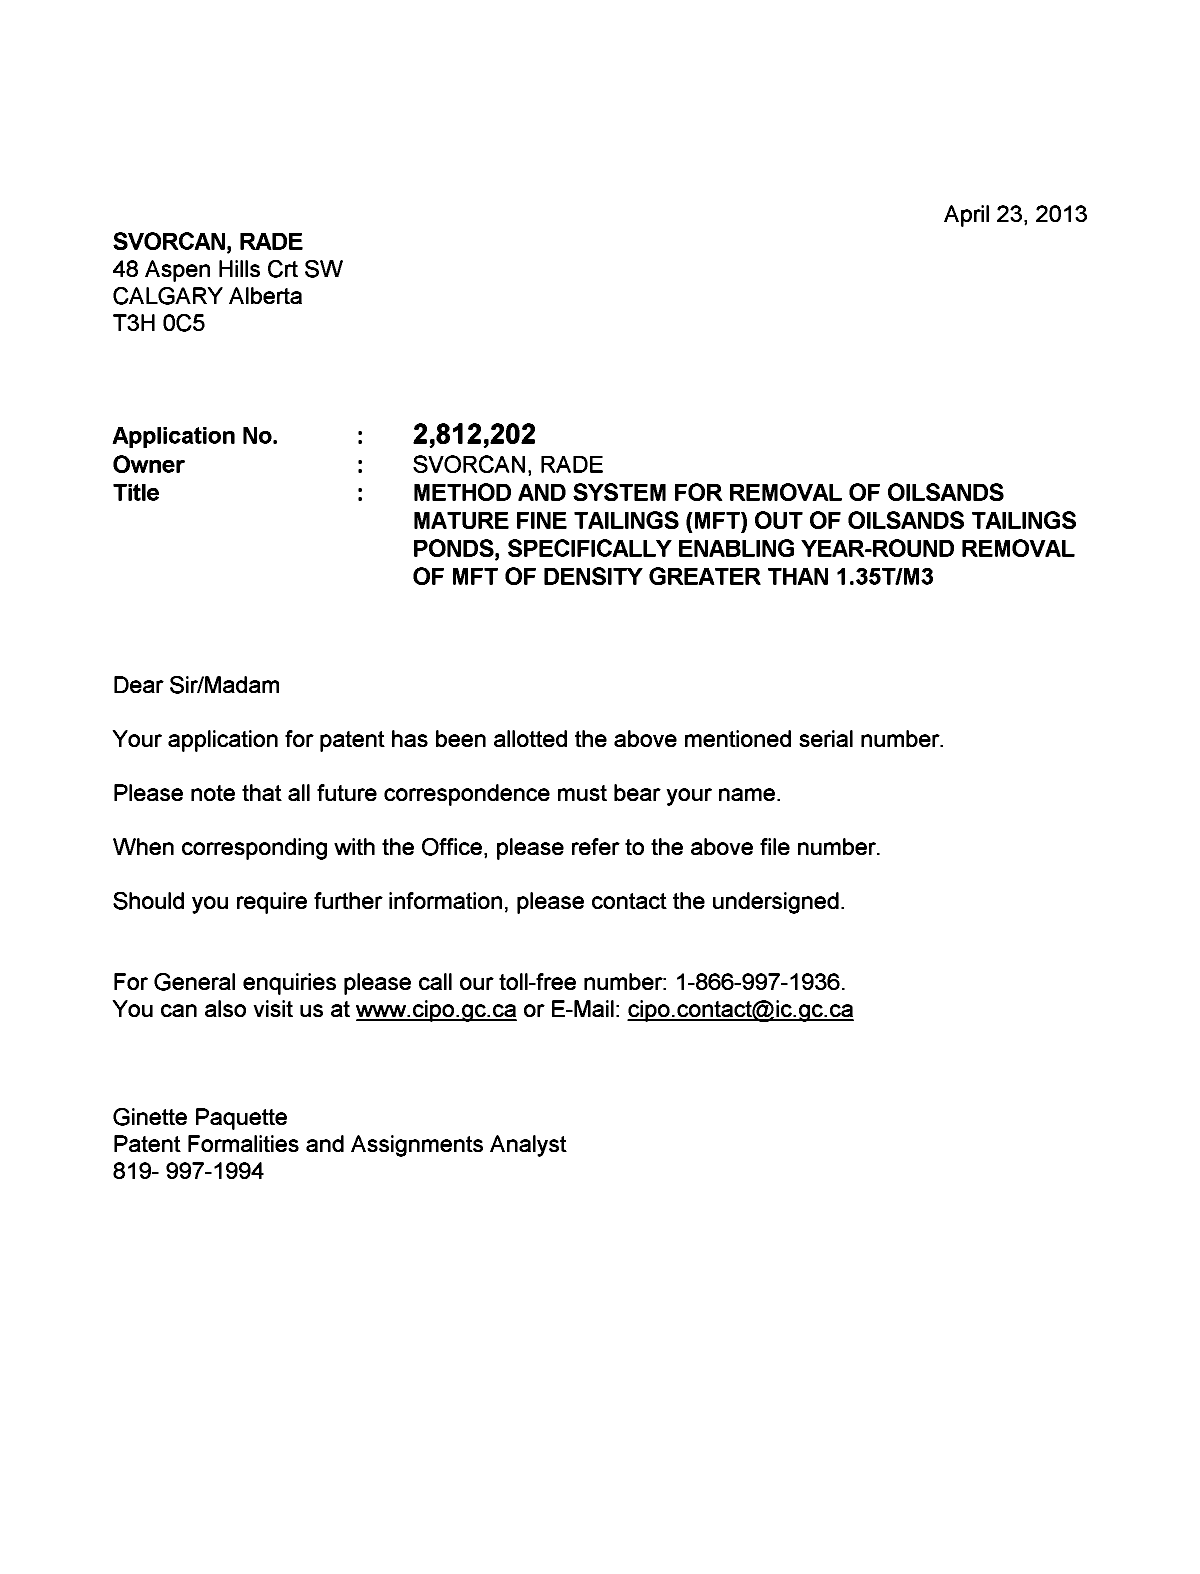 Canadian Patent Document 2812202. Correspondence 20130423. Image 1 of 1